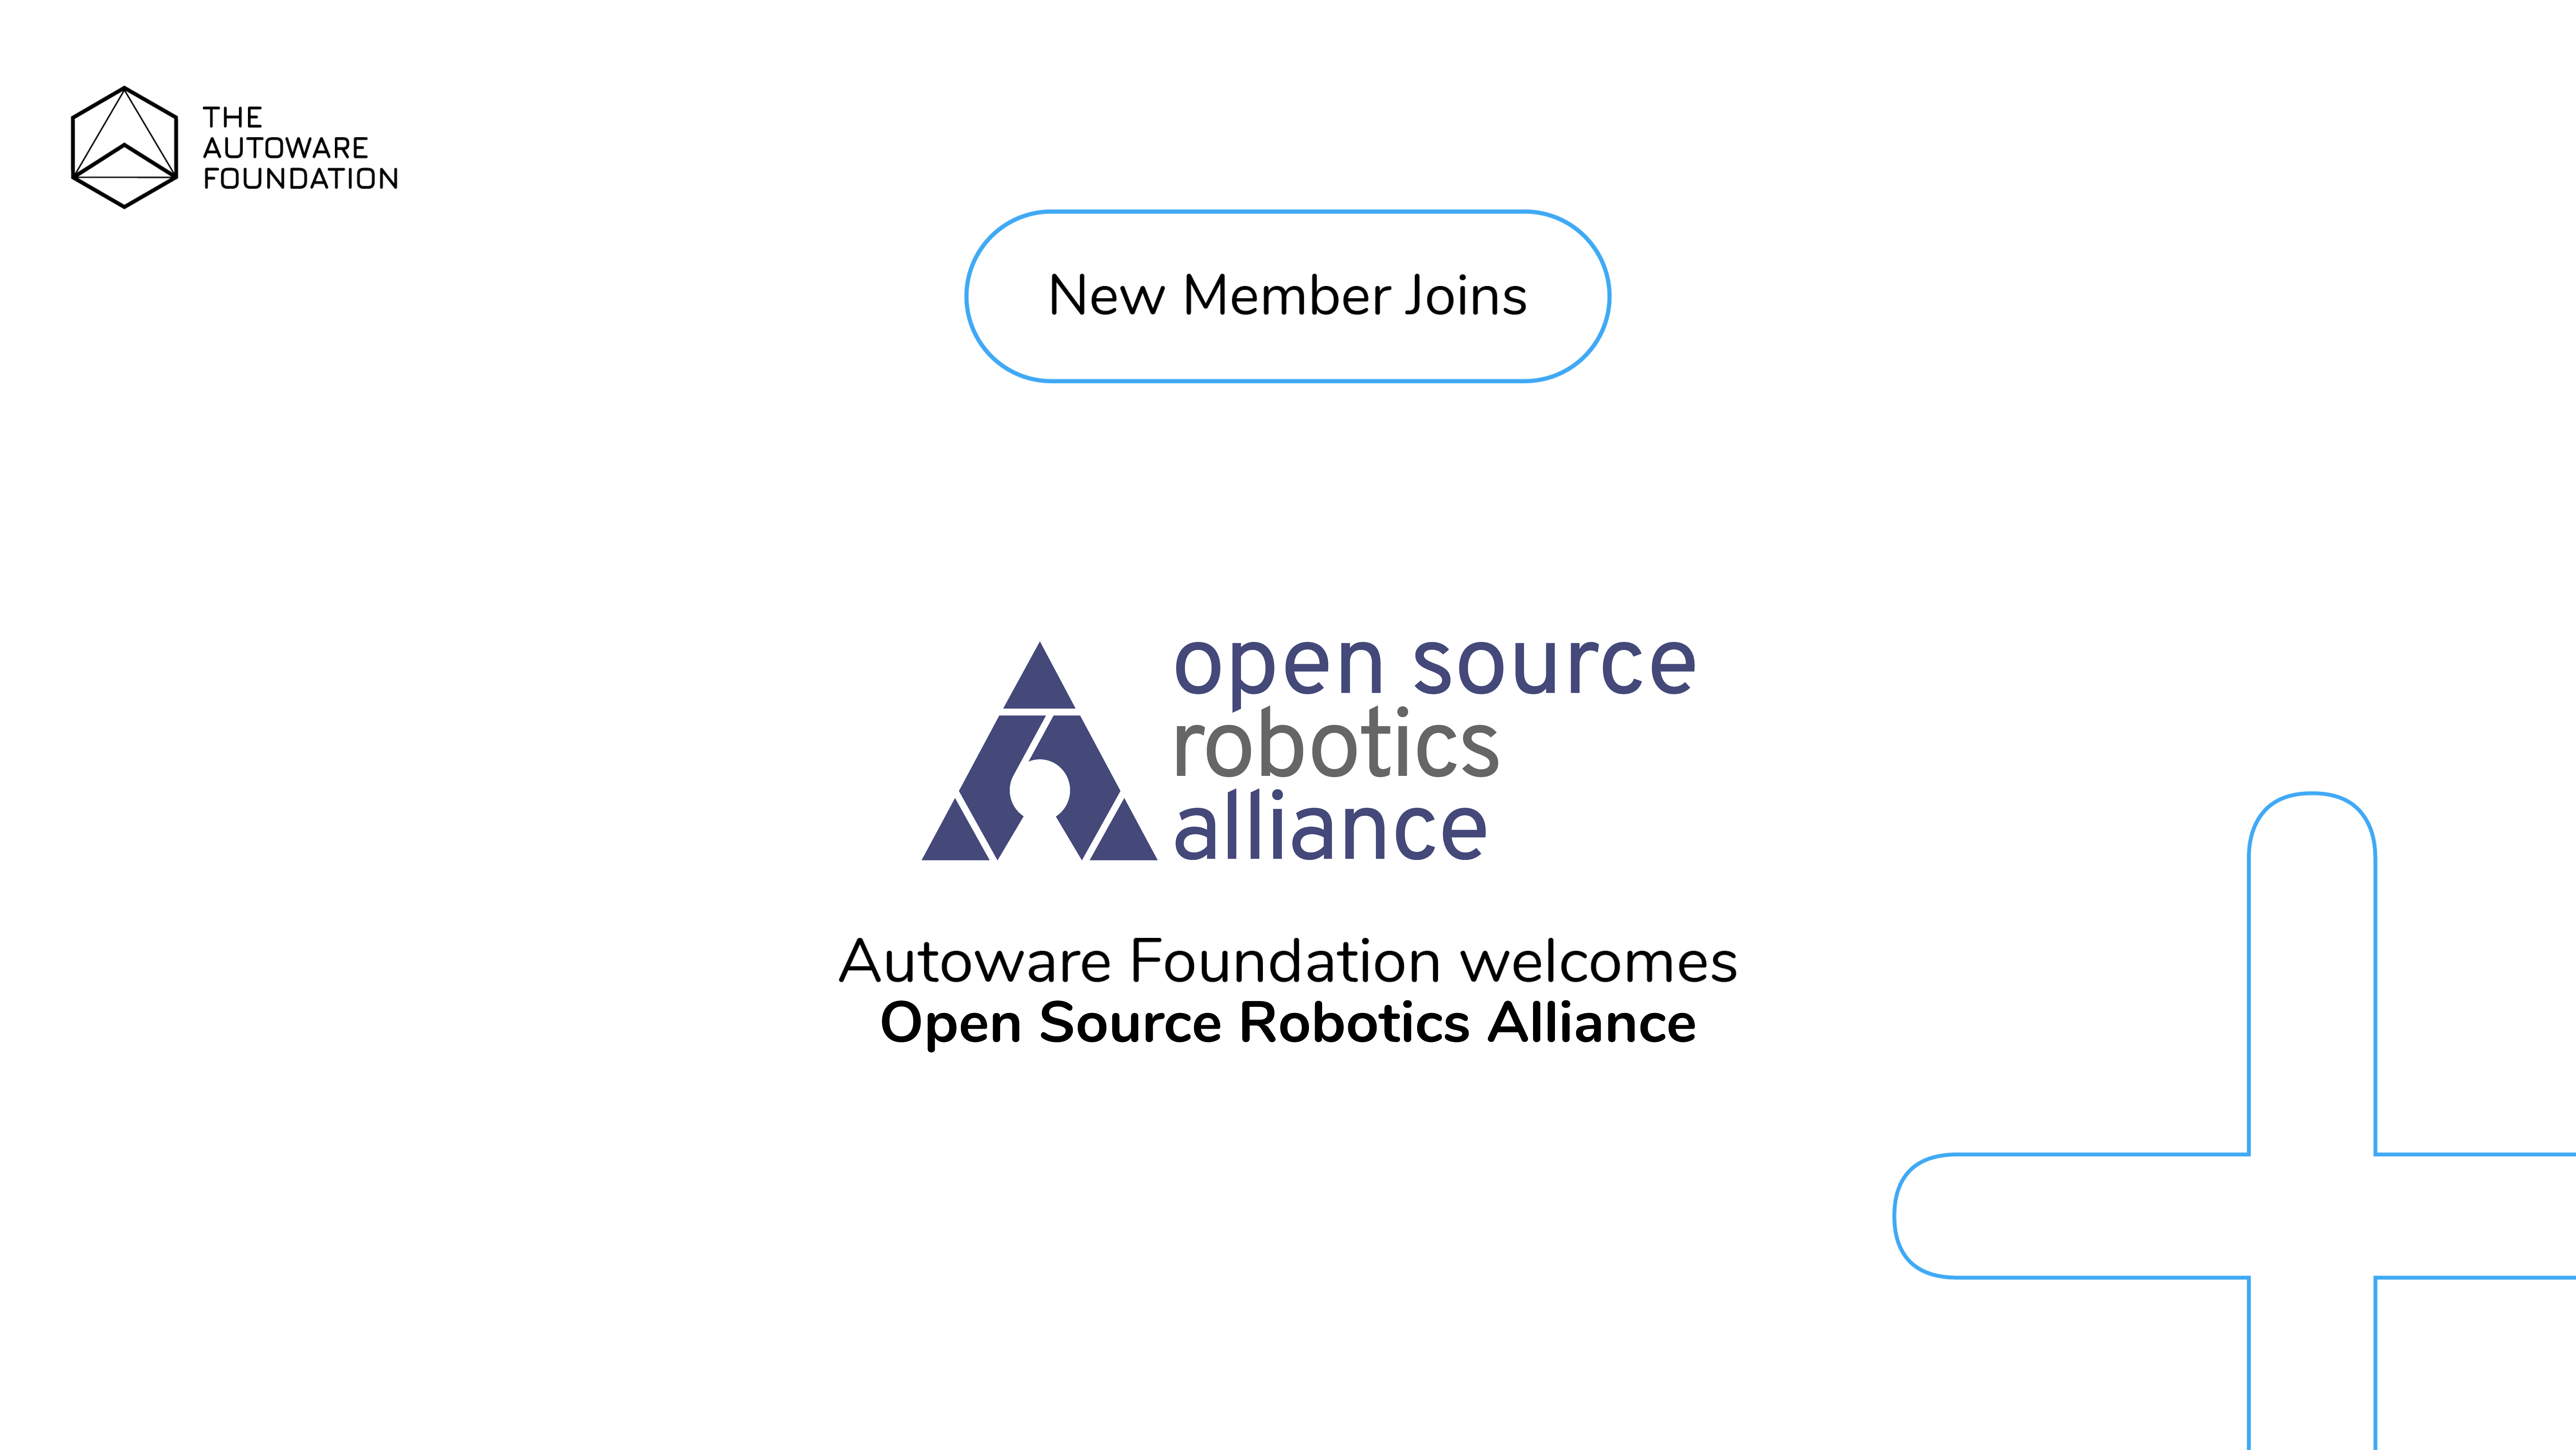 Open Source Robotics Alliance joins the Autoware Foundation!